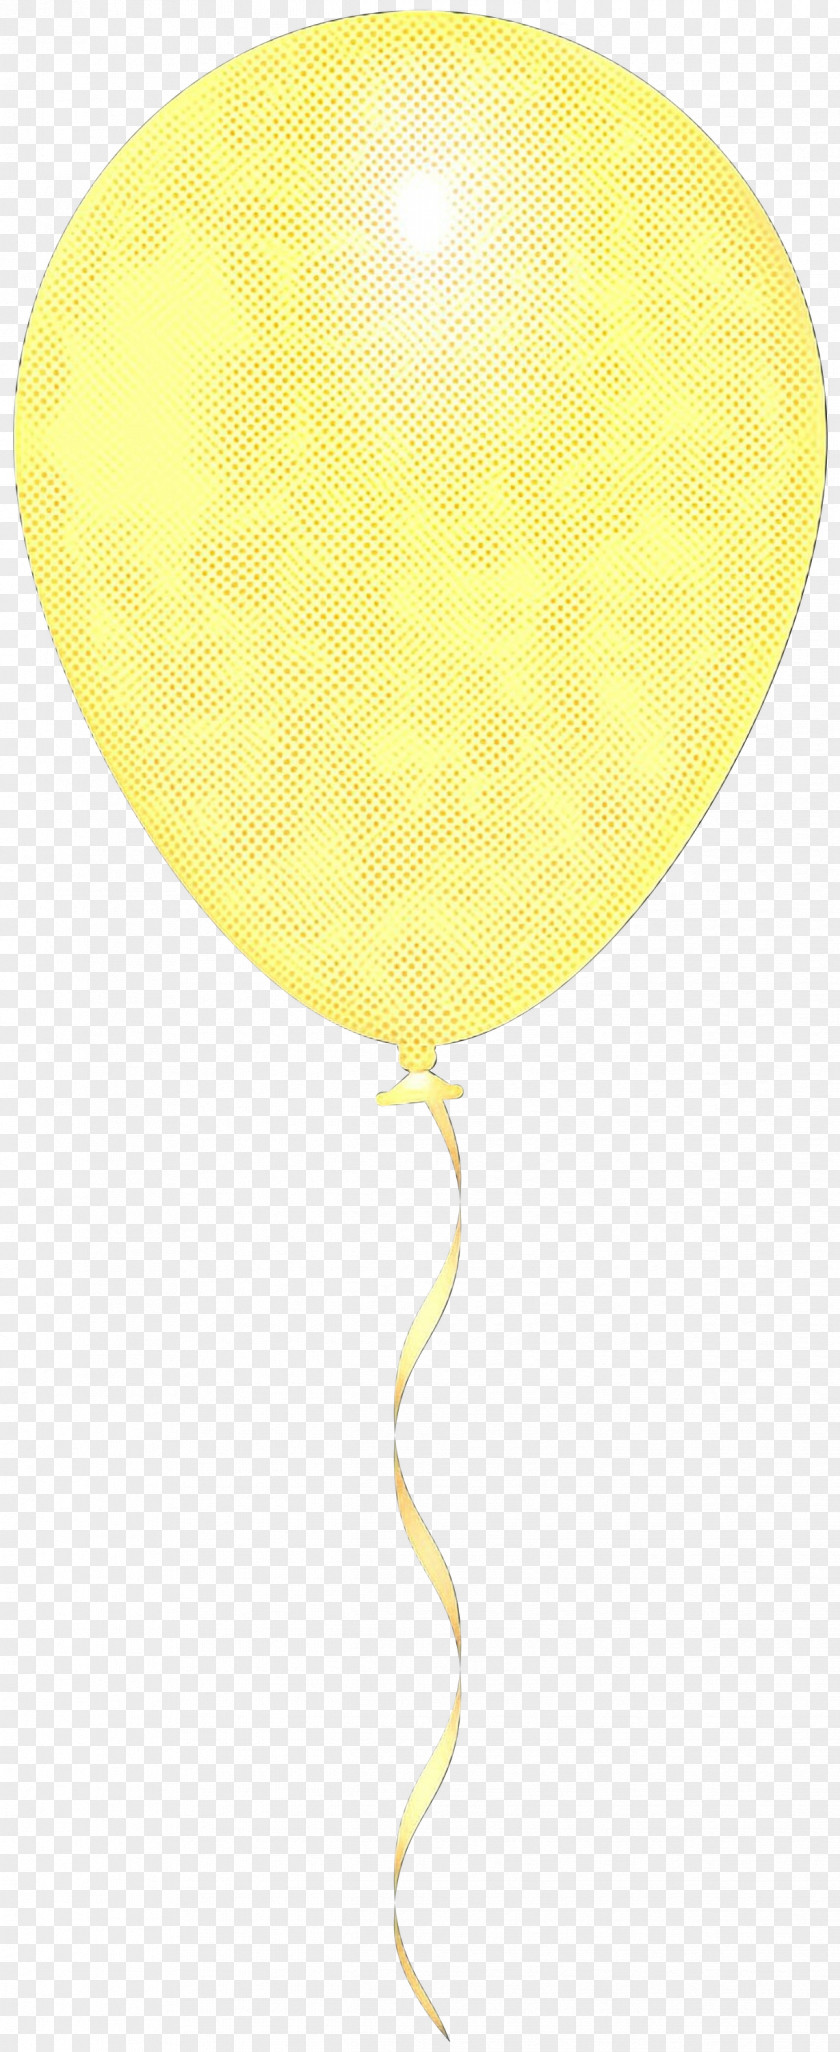 Party Supply Yellow Balloon Cartoon PNG